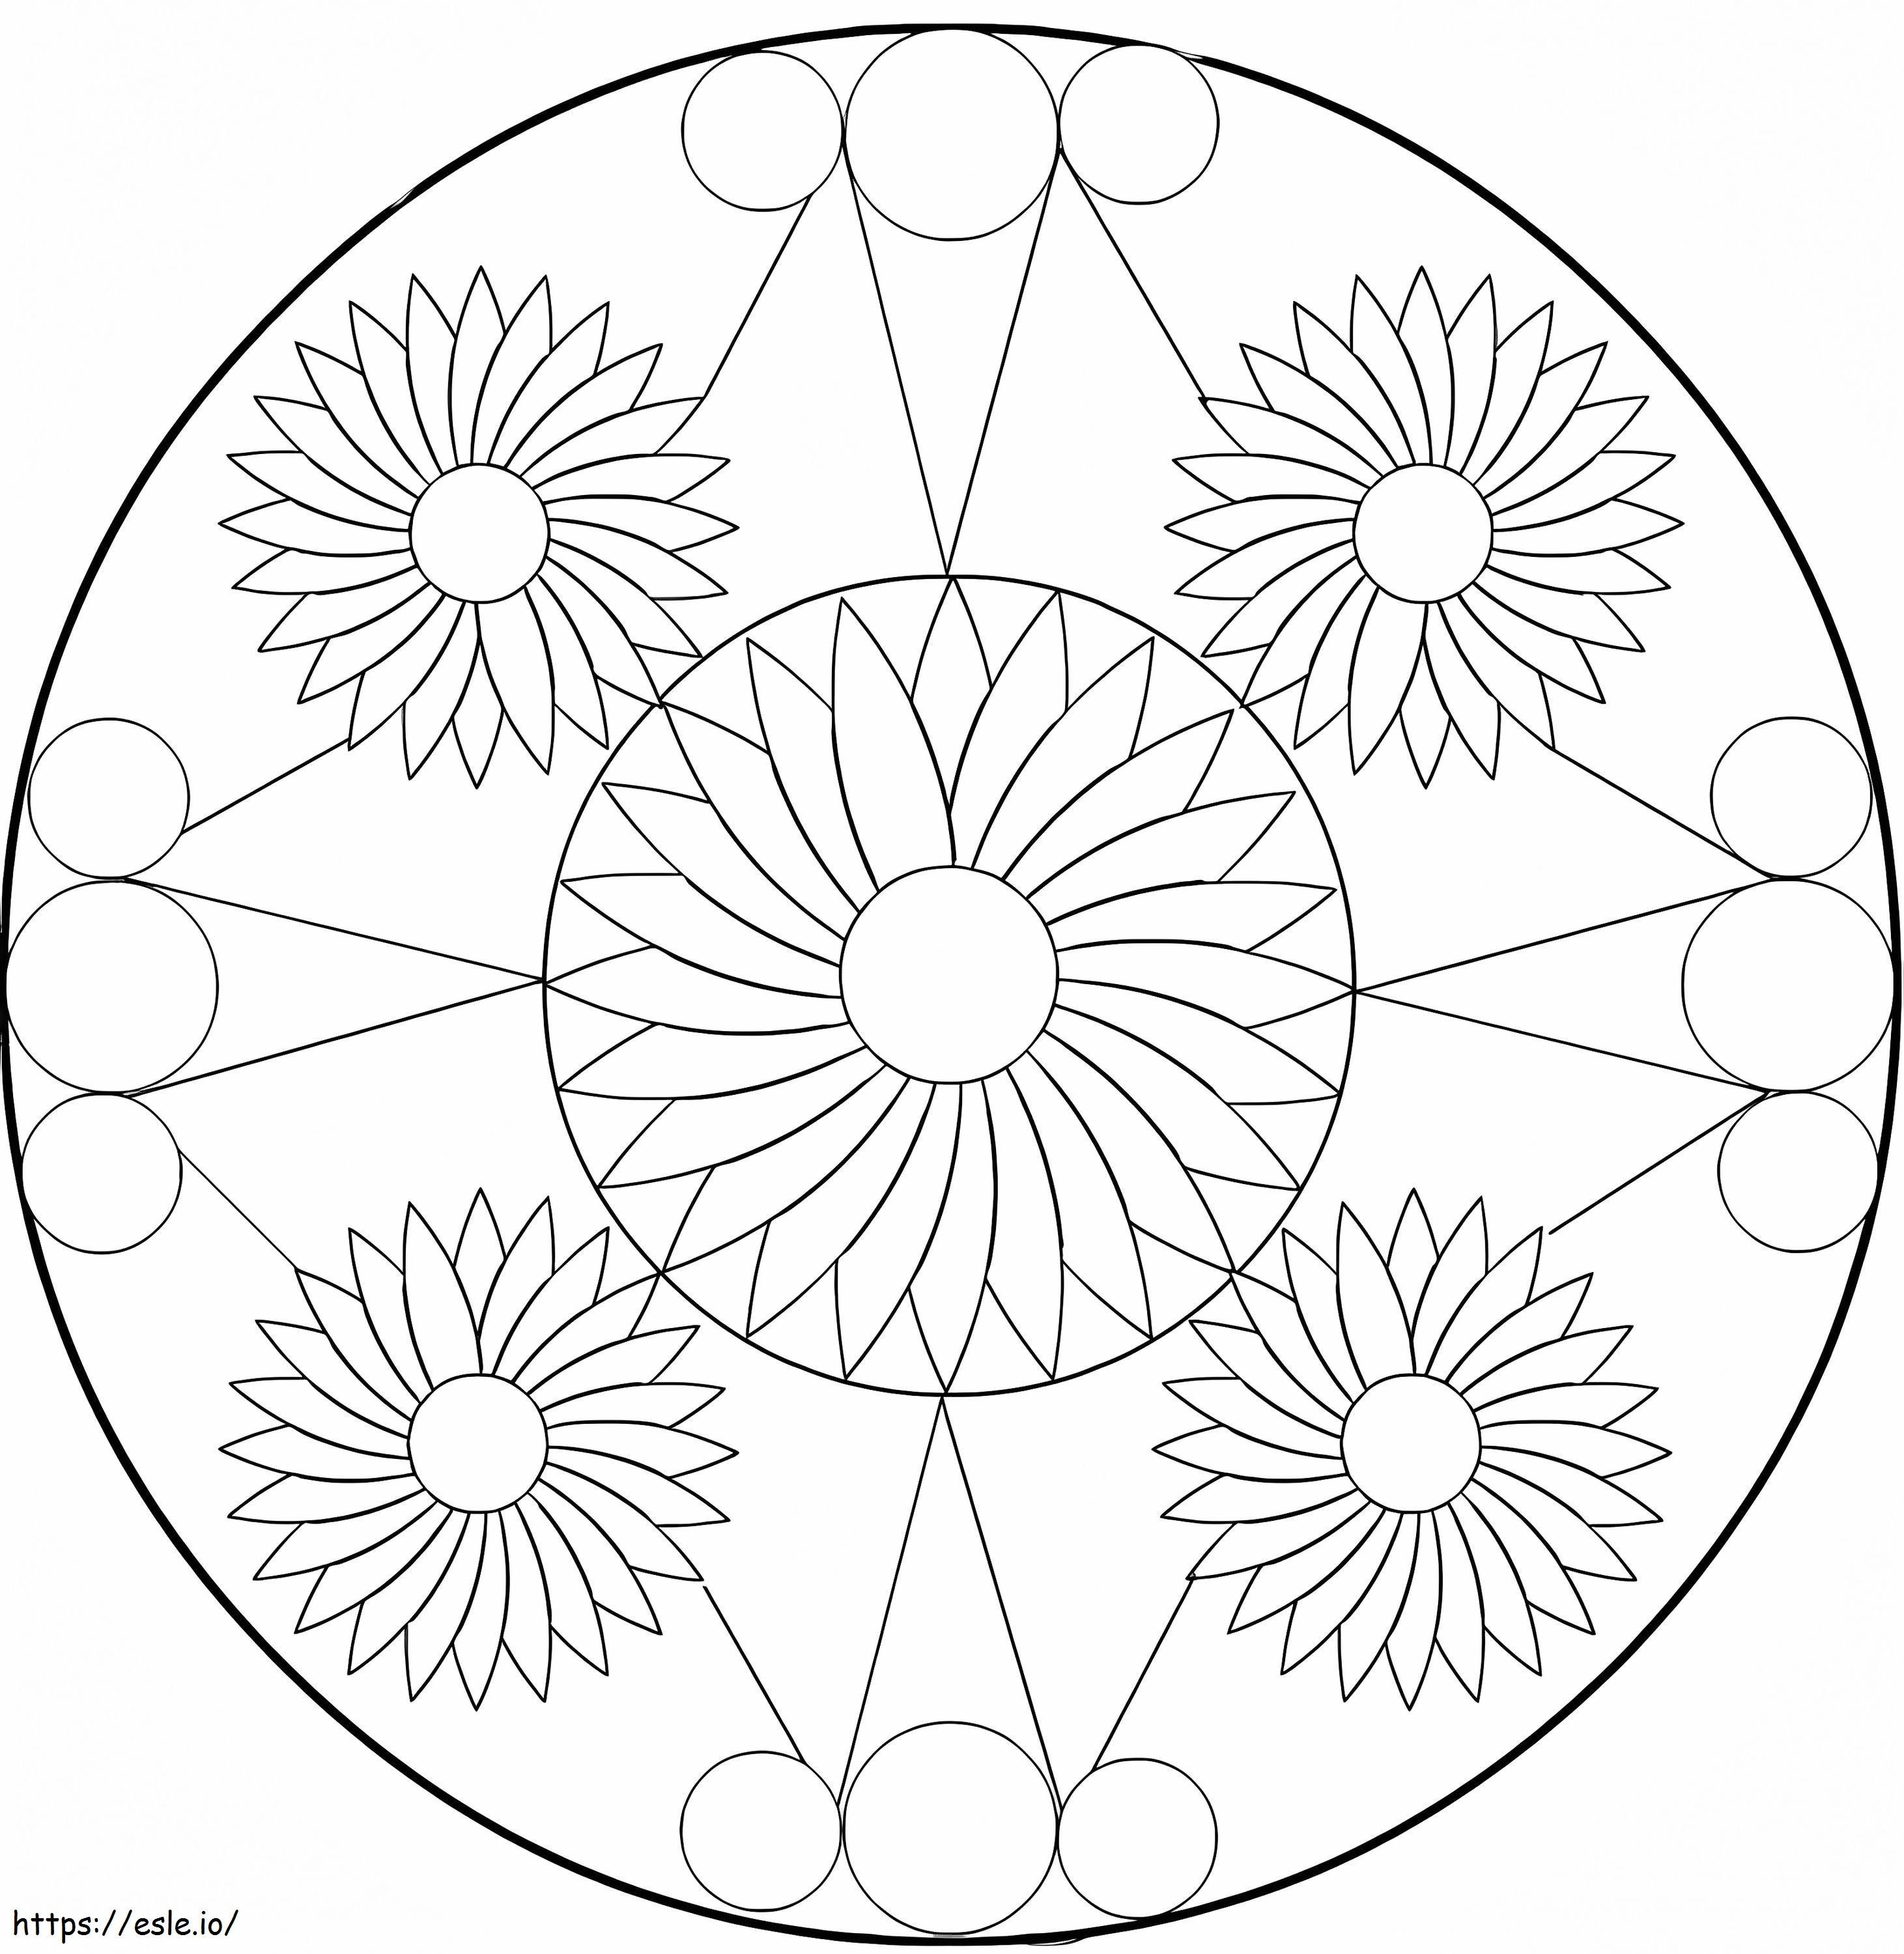 Cool Flower Mandala coloring page